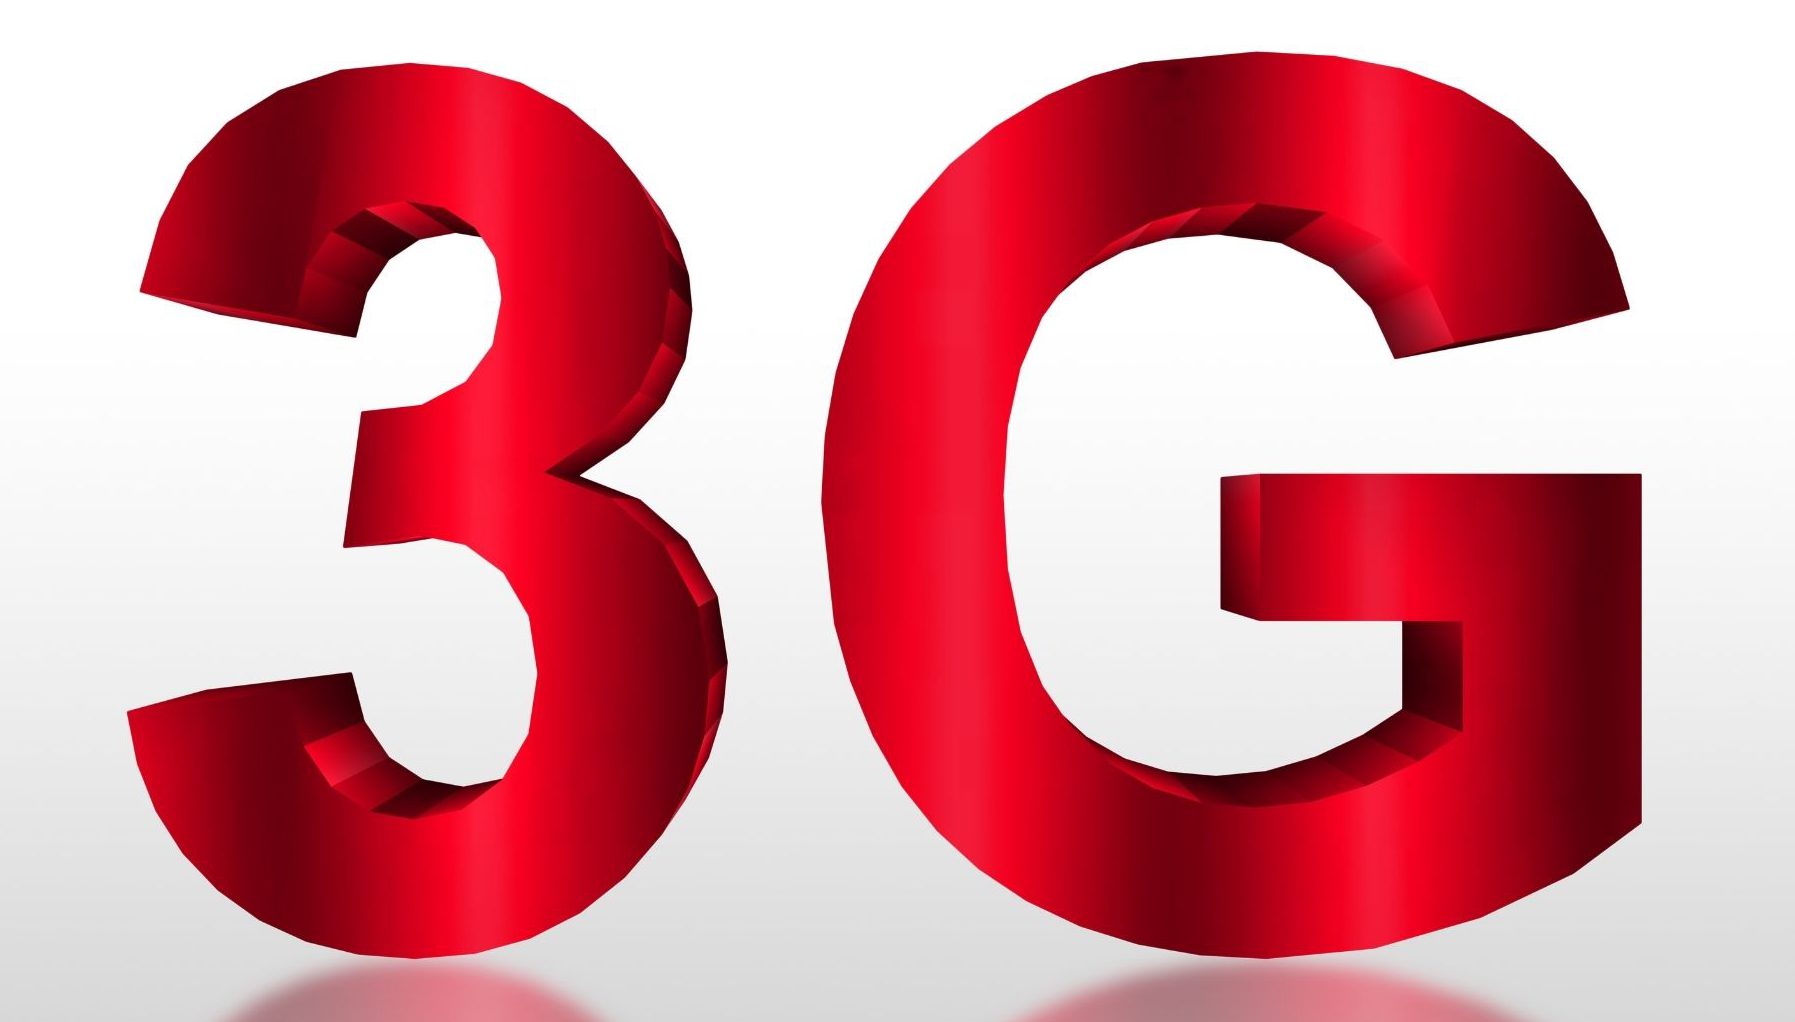 Global 3G Infrastructure Equipment Market